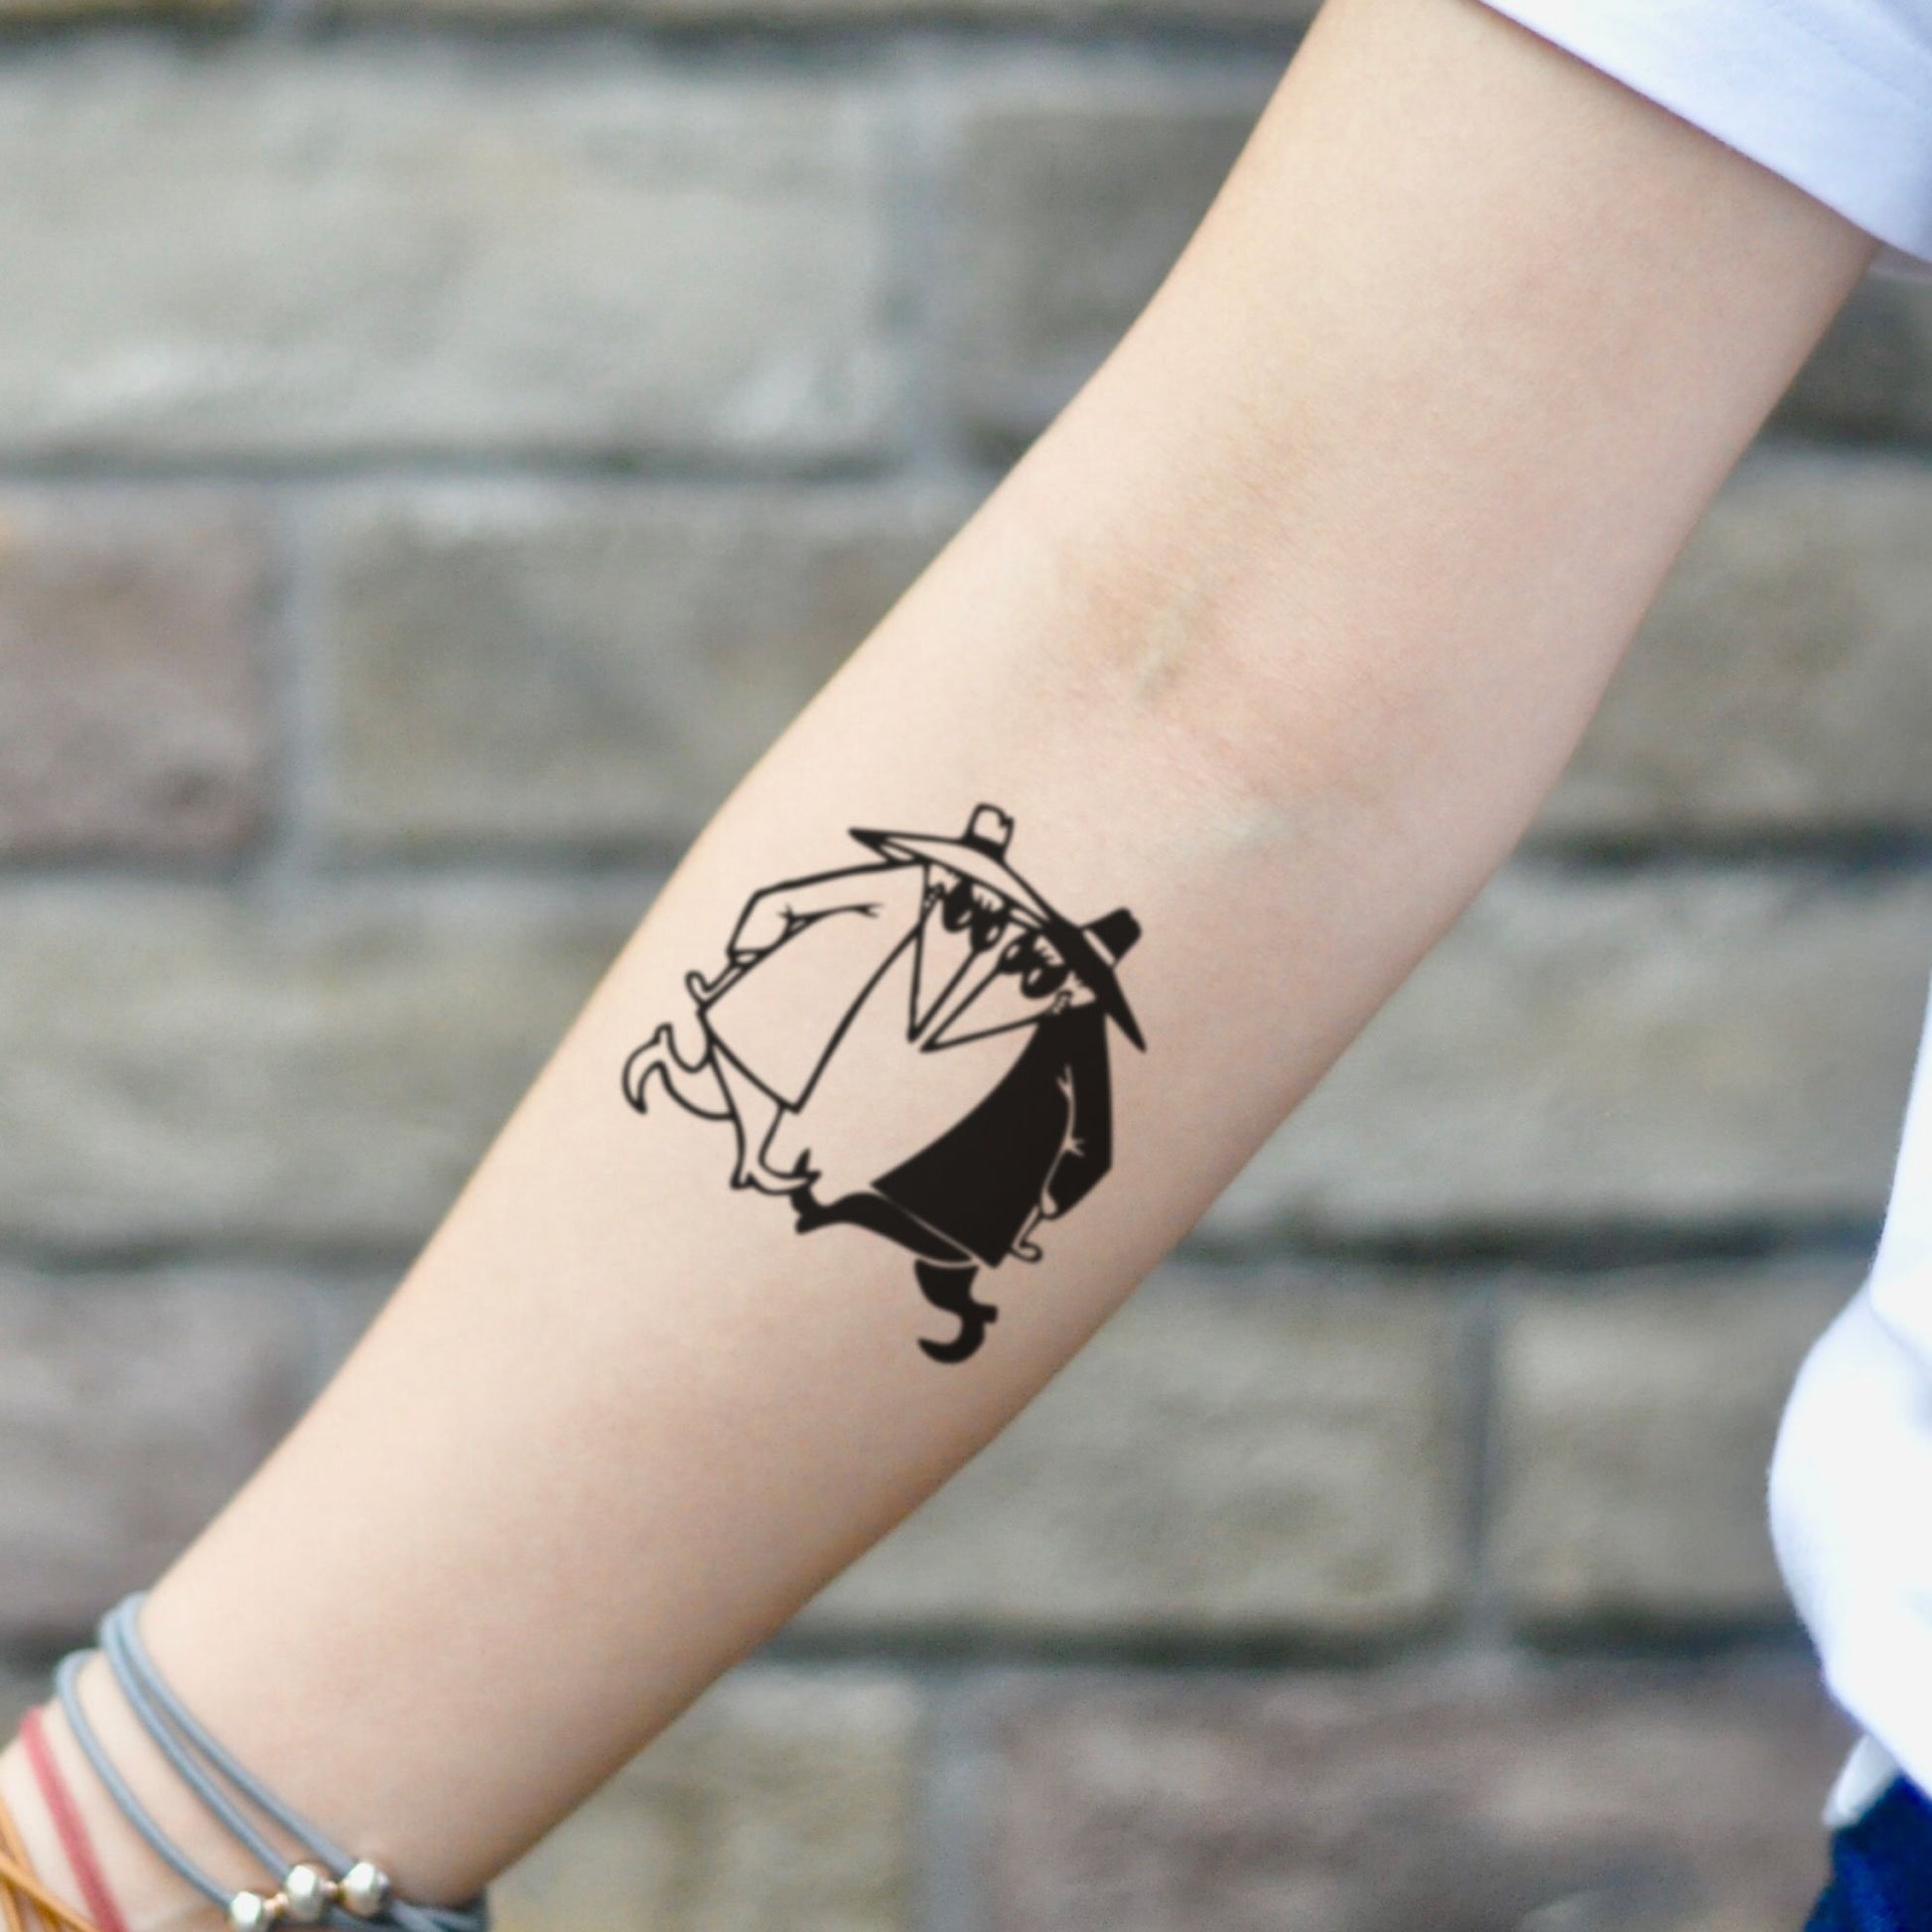 fake small spy vs spy illustrative temporary tattoo sticker design idea on inner arm